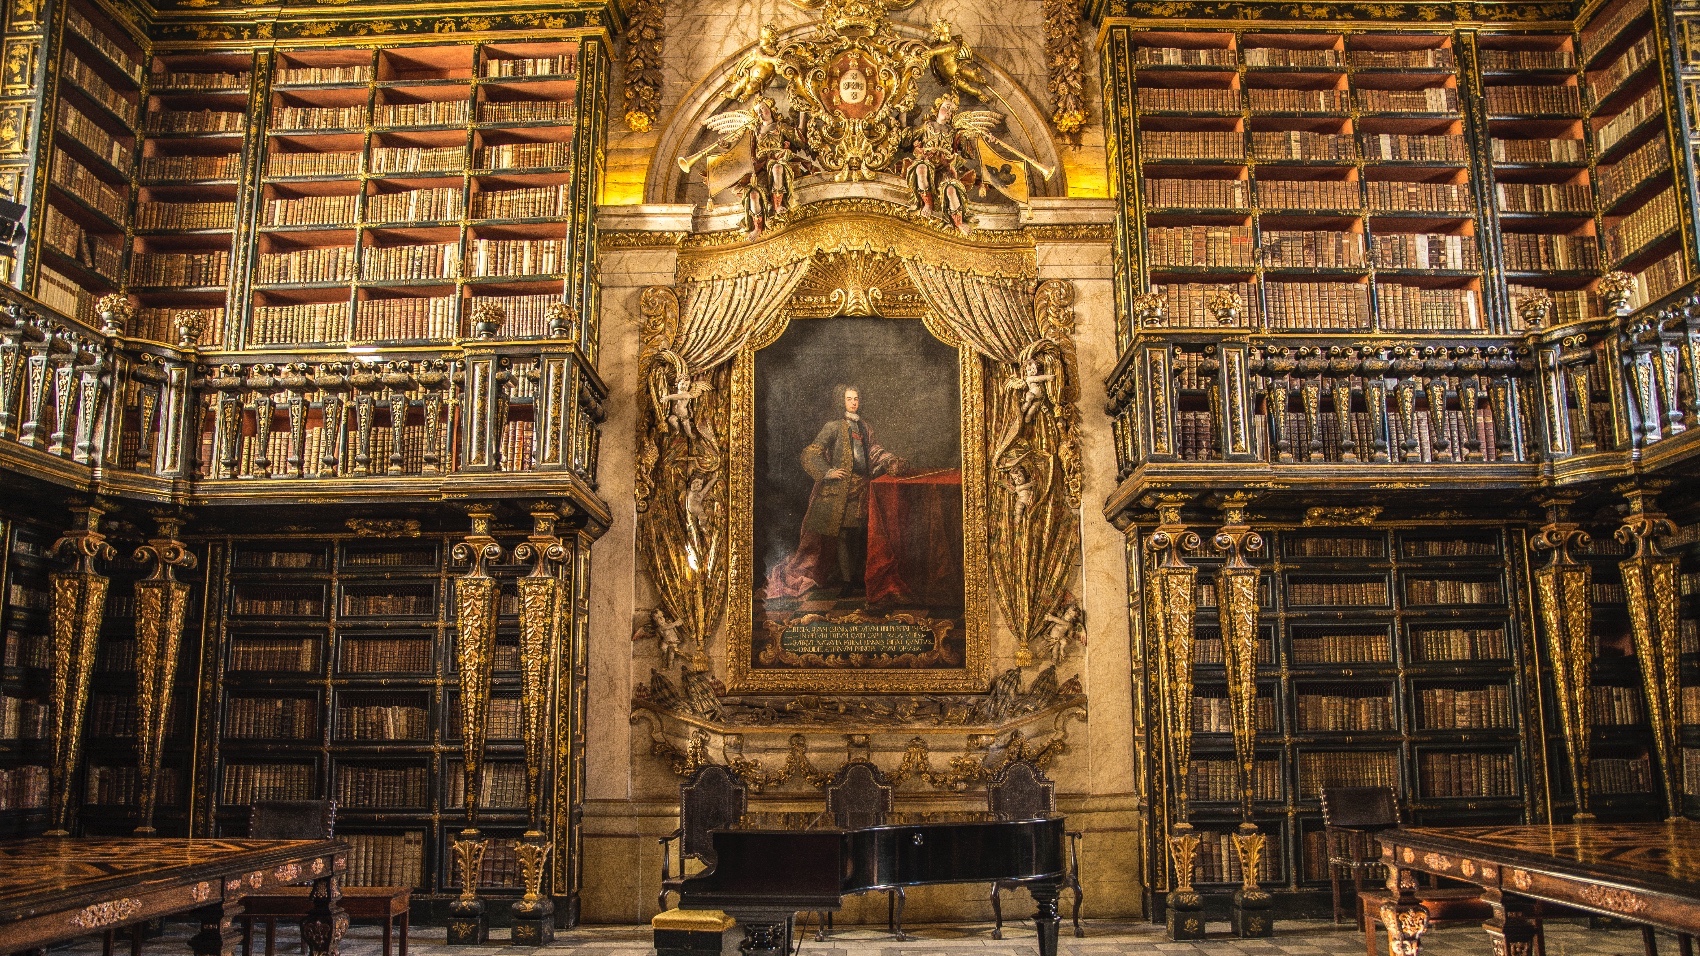 Turismo Centro de Portugal - Porto Surrounding With Coimbra Cultural Tour library